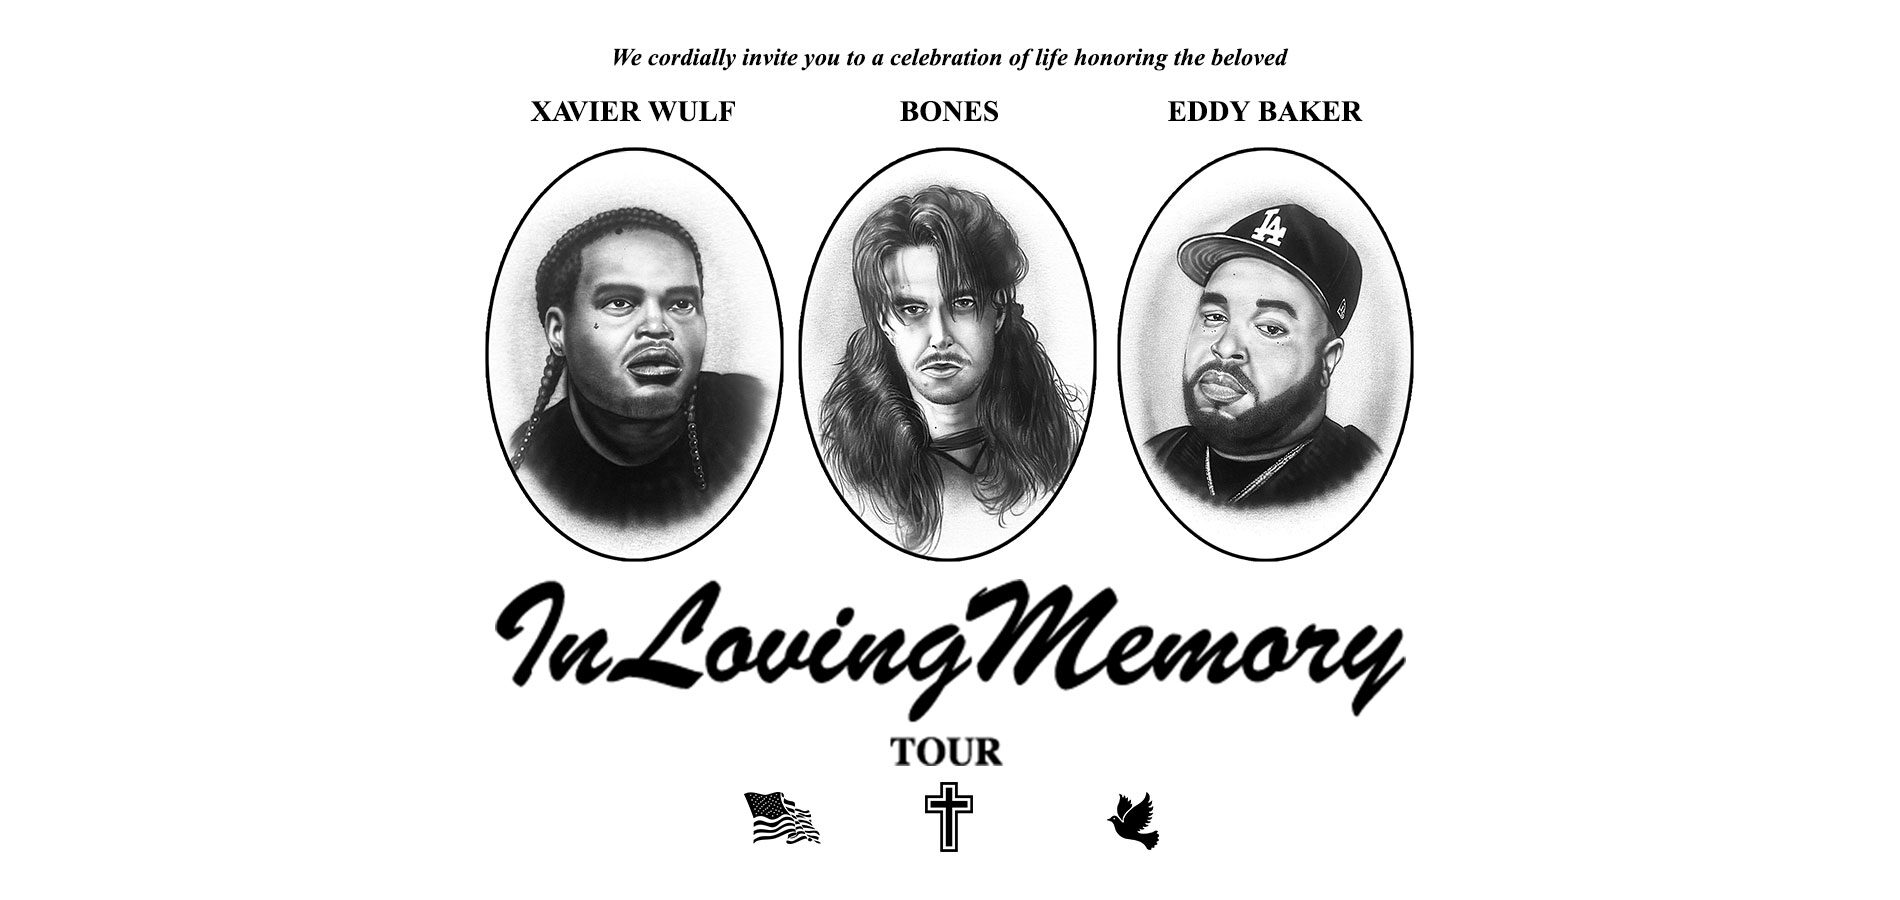 The InLovingMemory Tour with Bones, Xavier Wulf and Eddy Baker